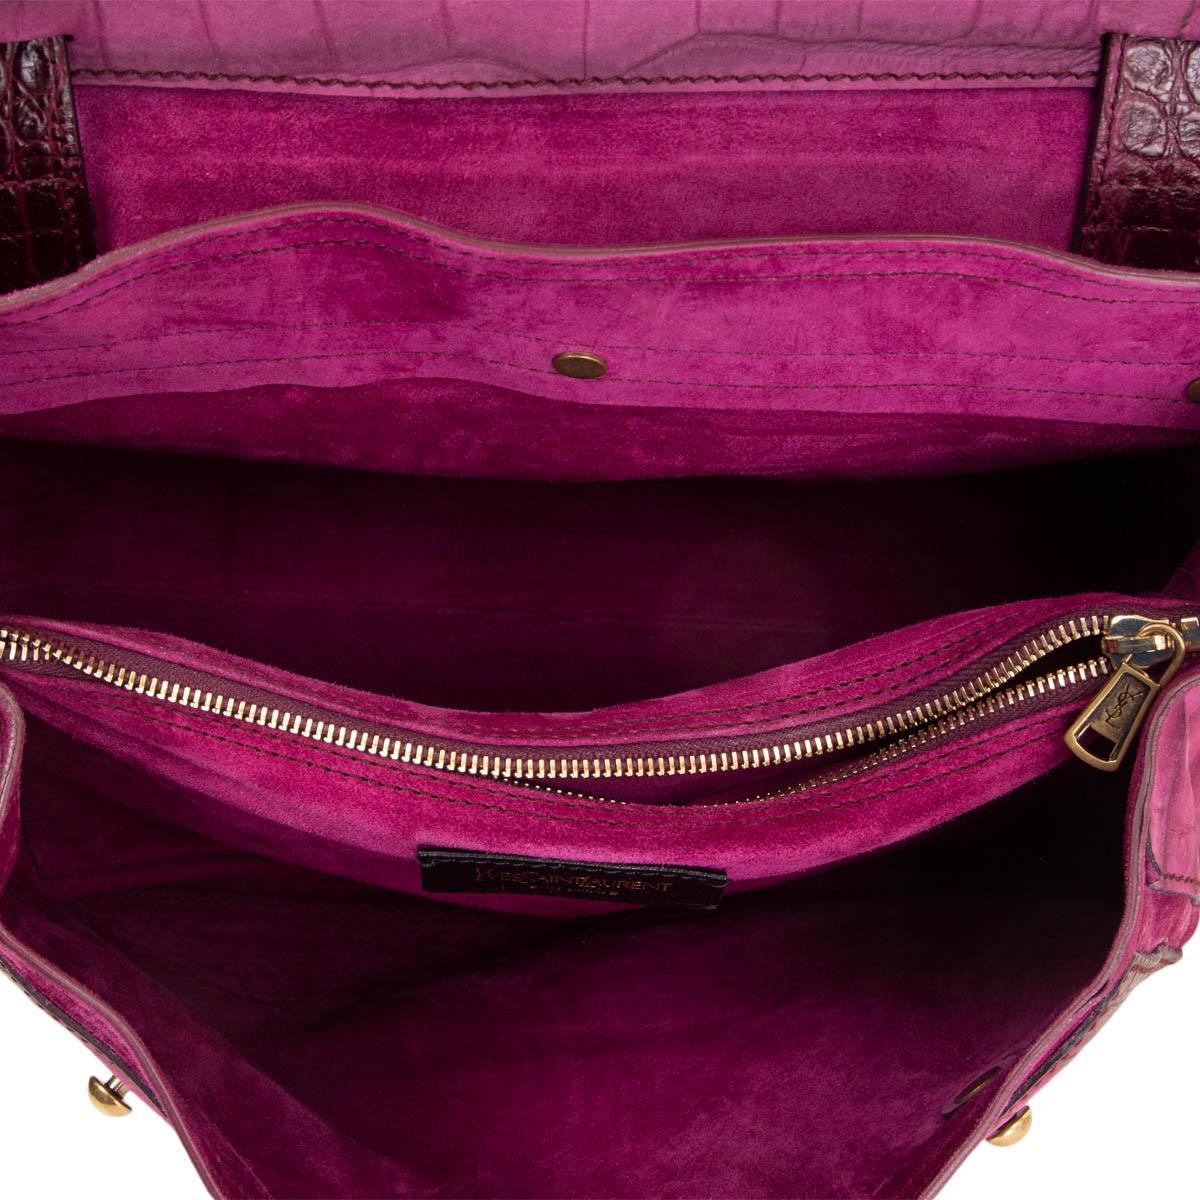 Brown YVES SAINT LAURENT purple suede MUSE TWO MEDIUM CROC Satchel Bag